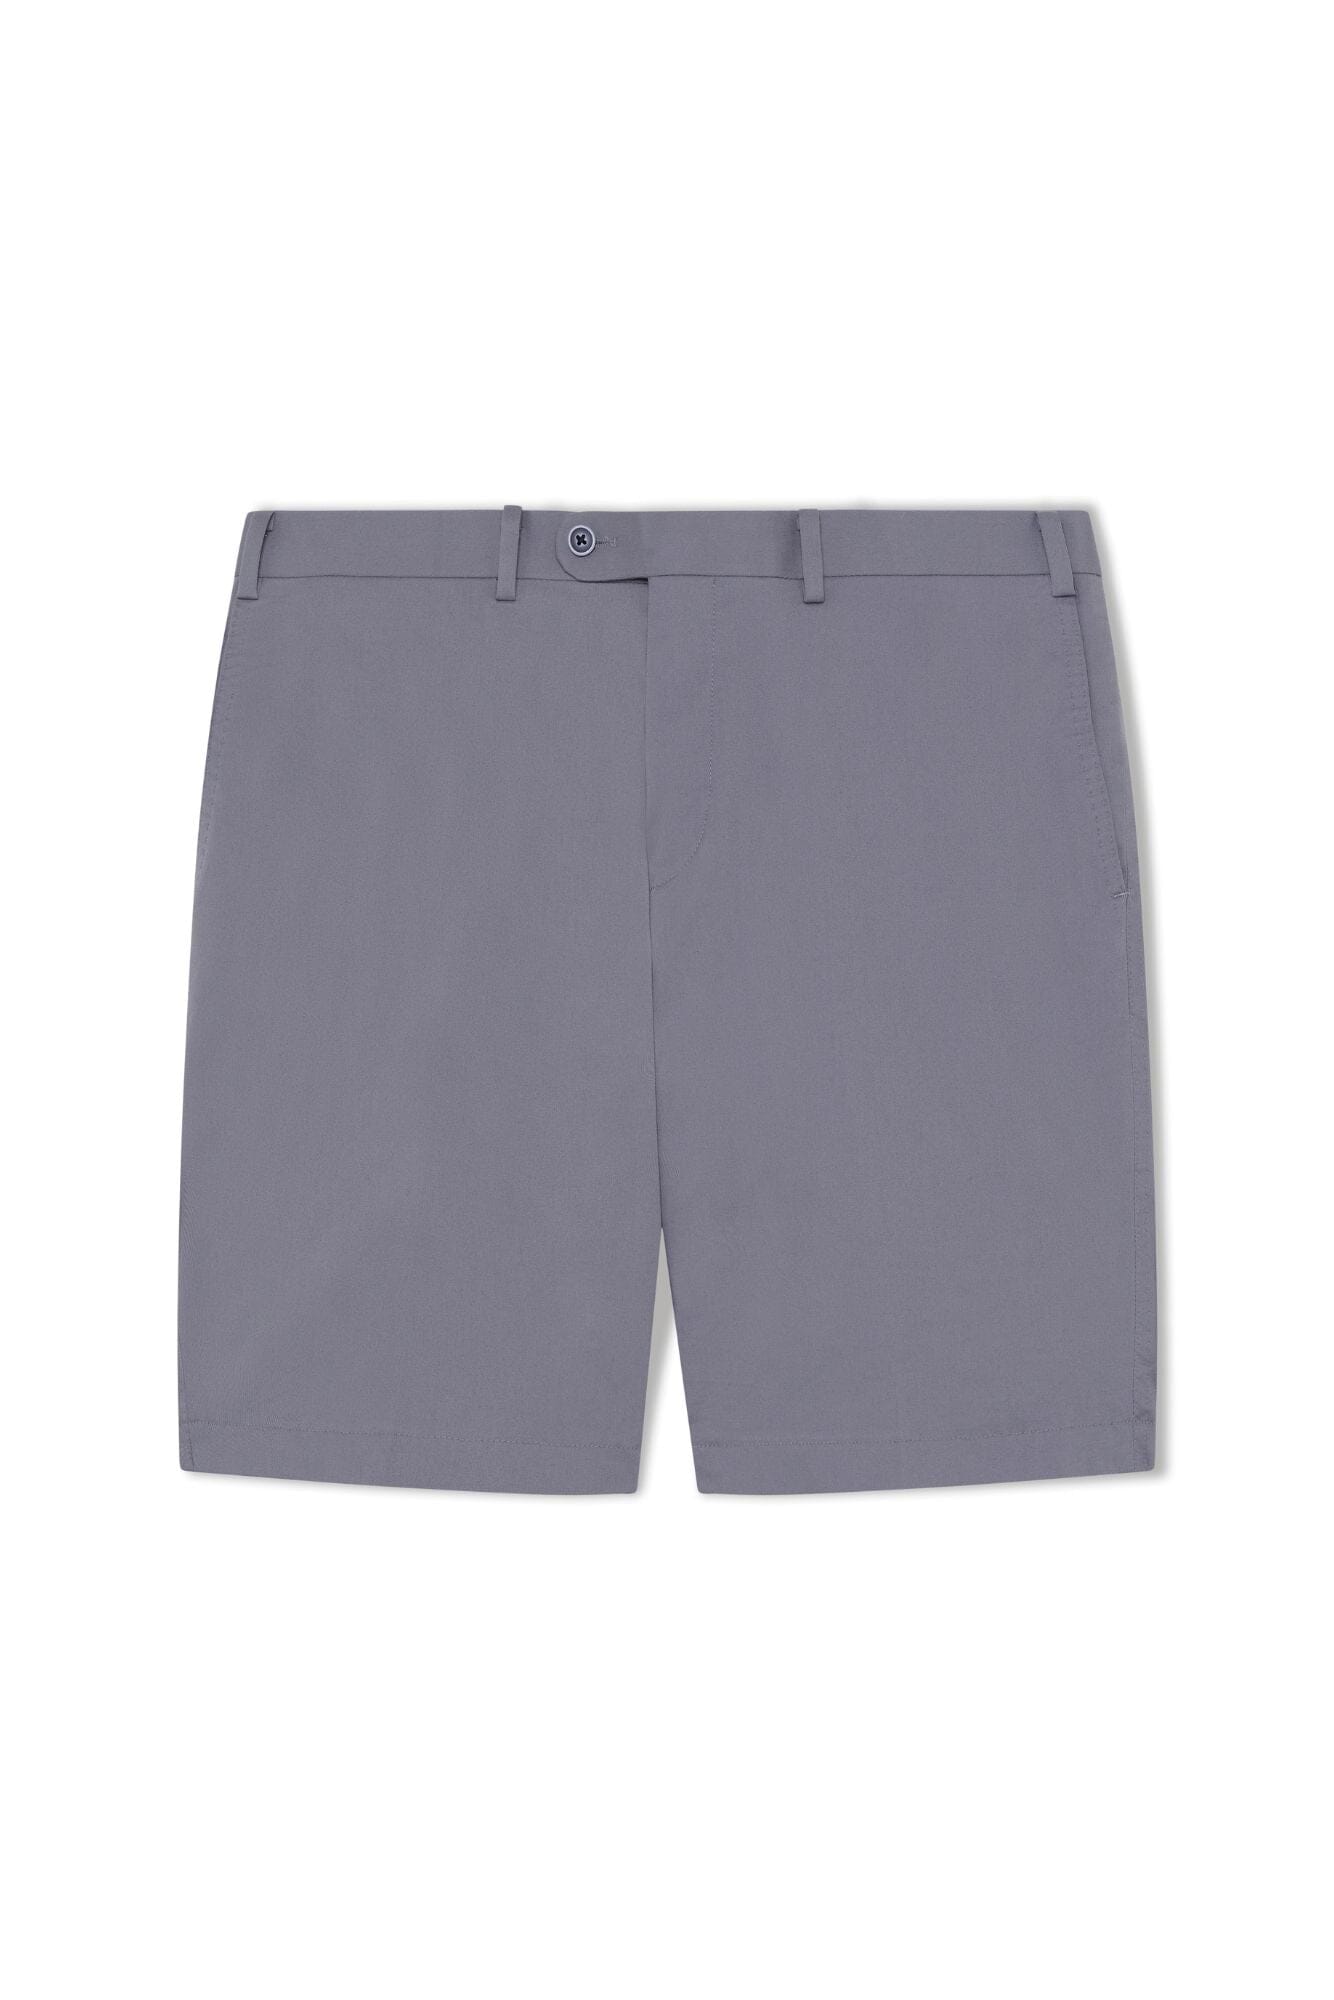 CGC Tailored Shorts - Grey Blue Stretch Cotton